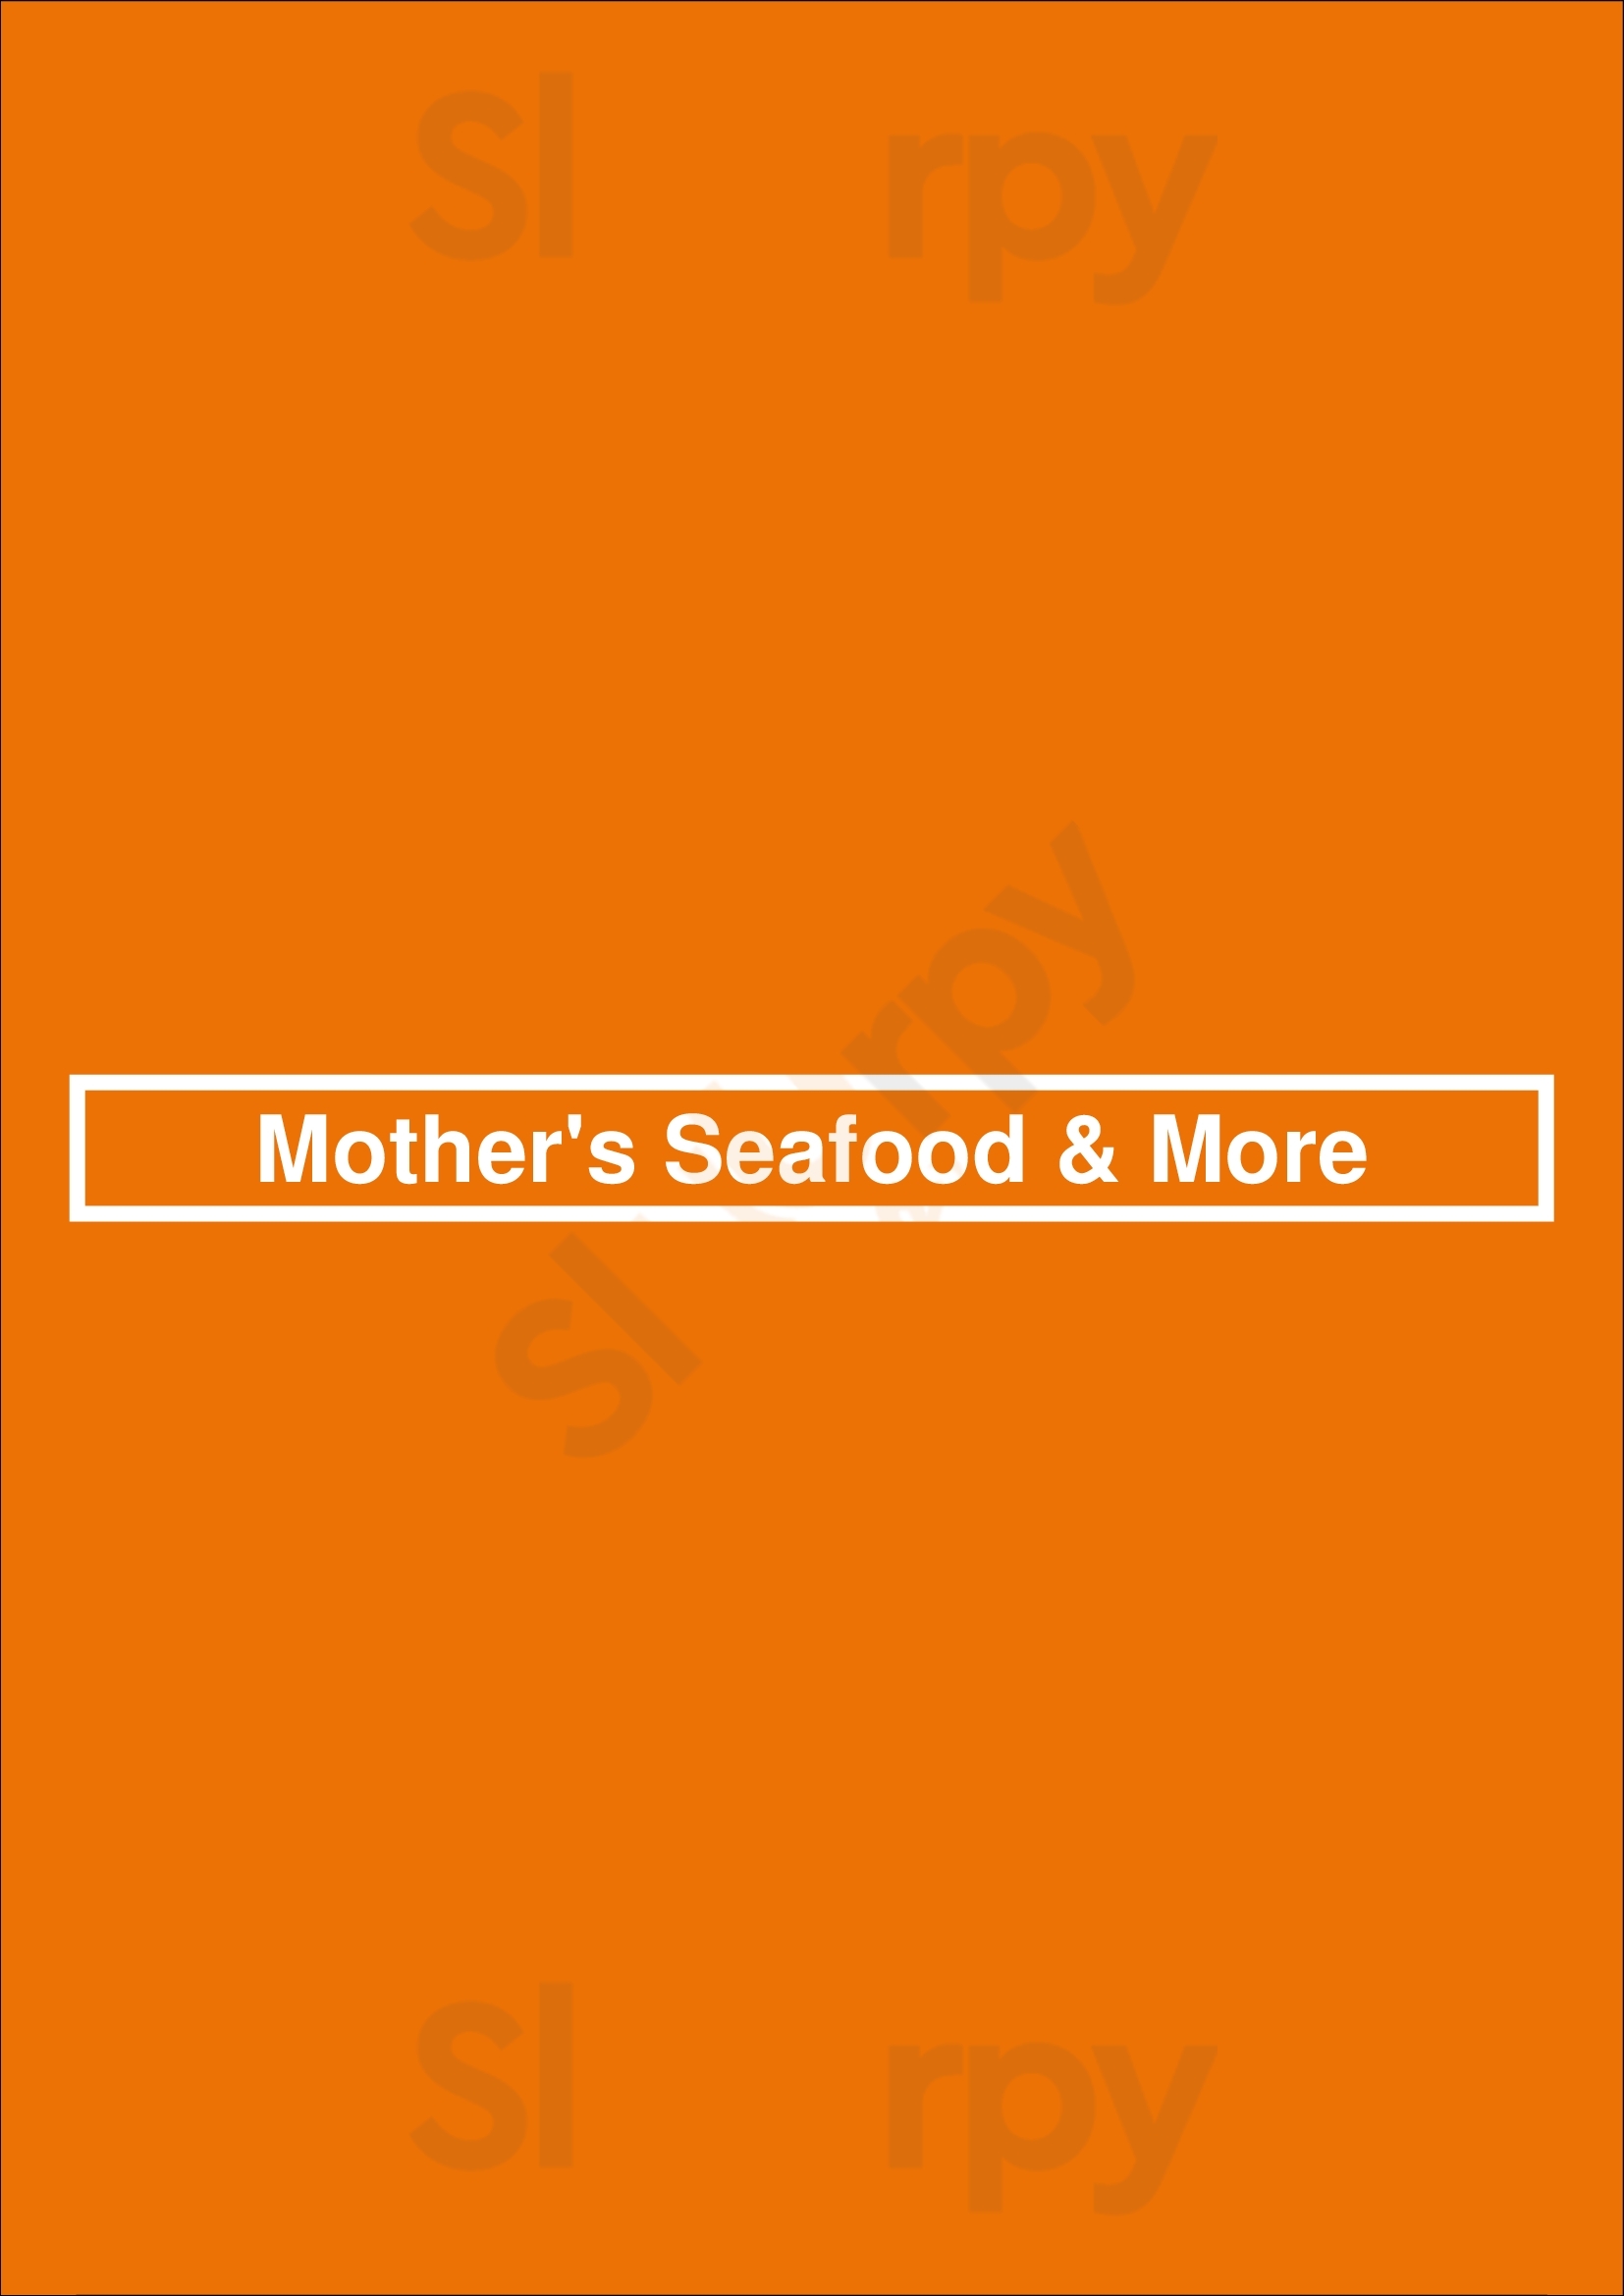 Mother's Seafood & More Brooklyn Menu - 1